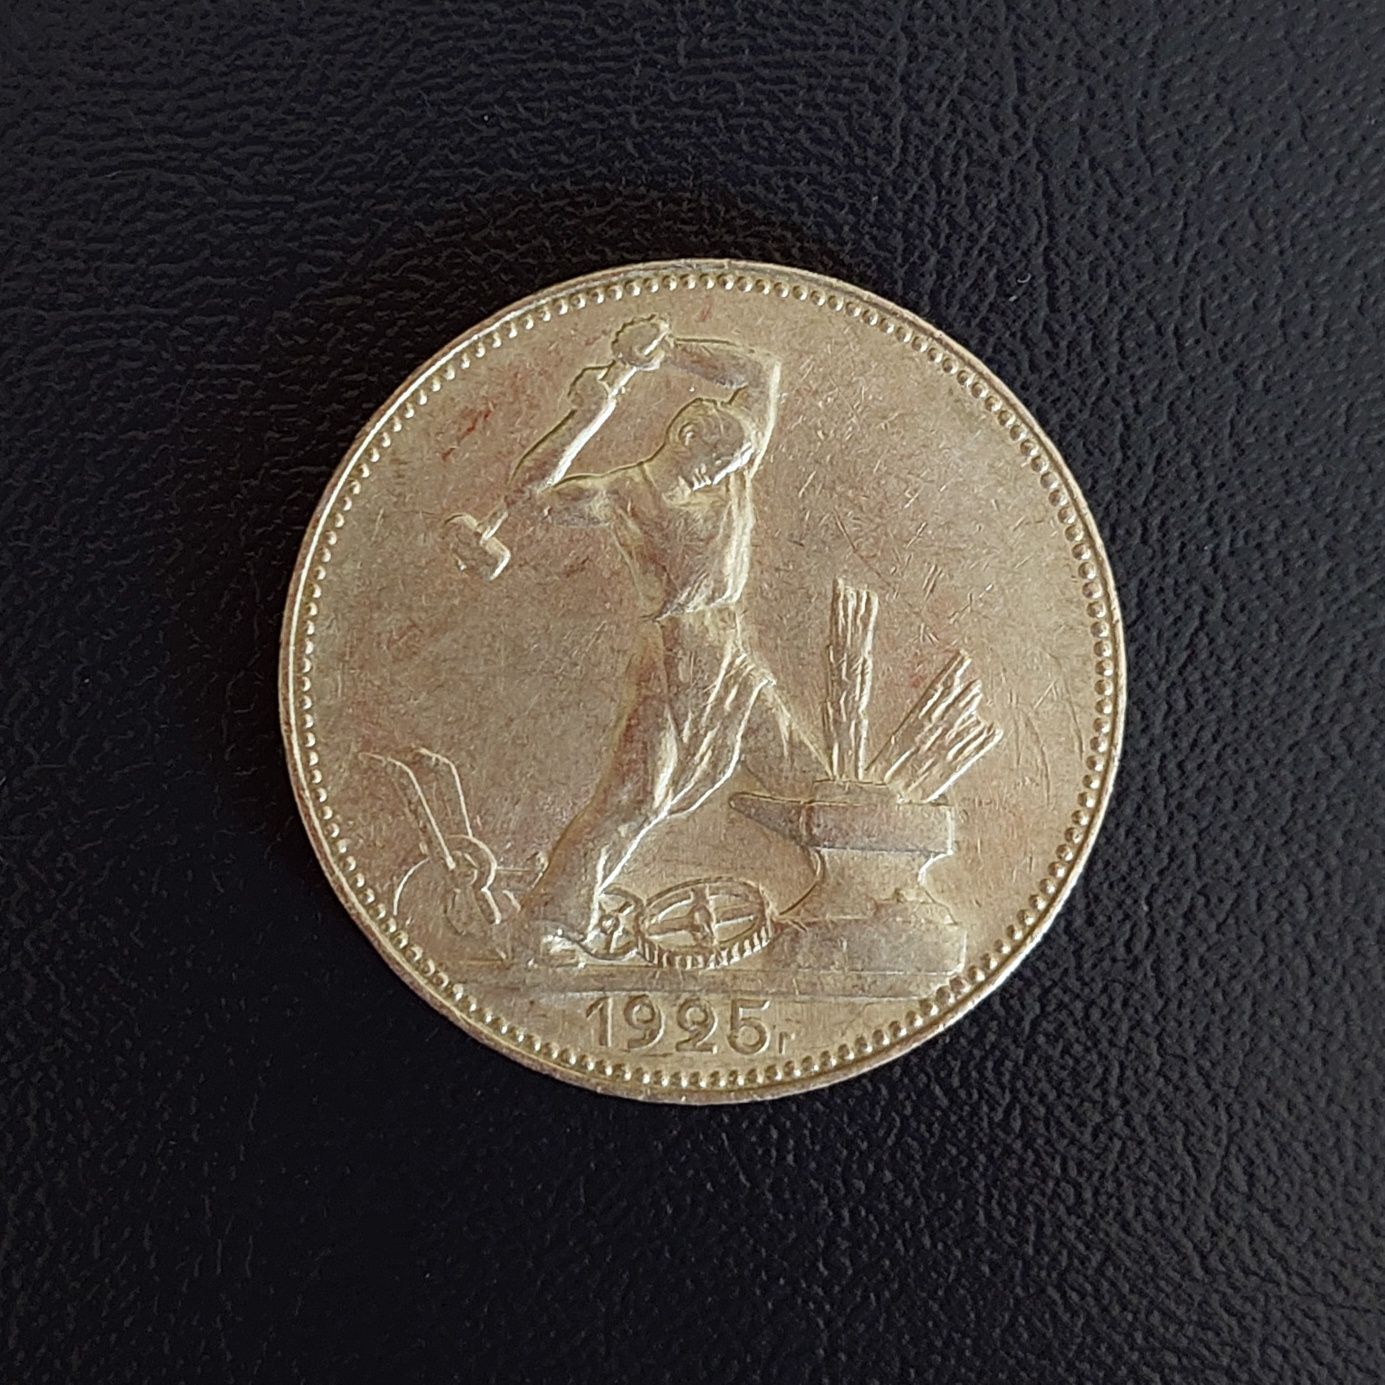 50 копеек 1925 года серебро